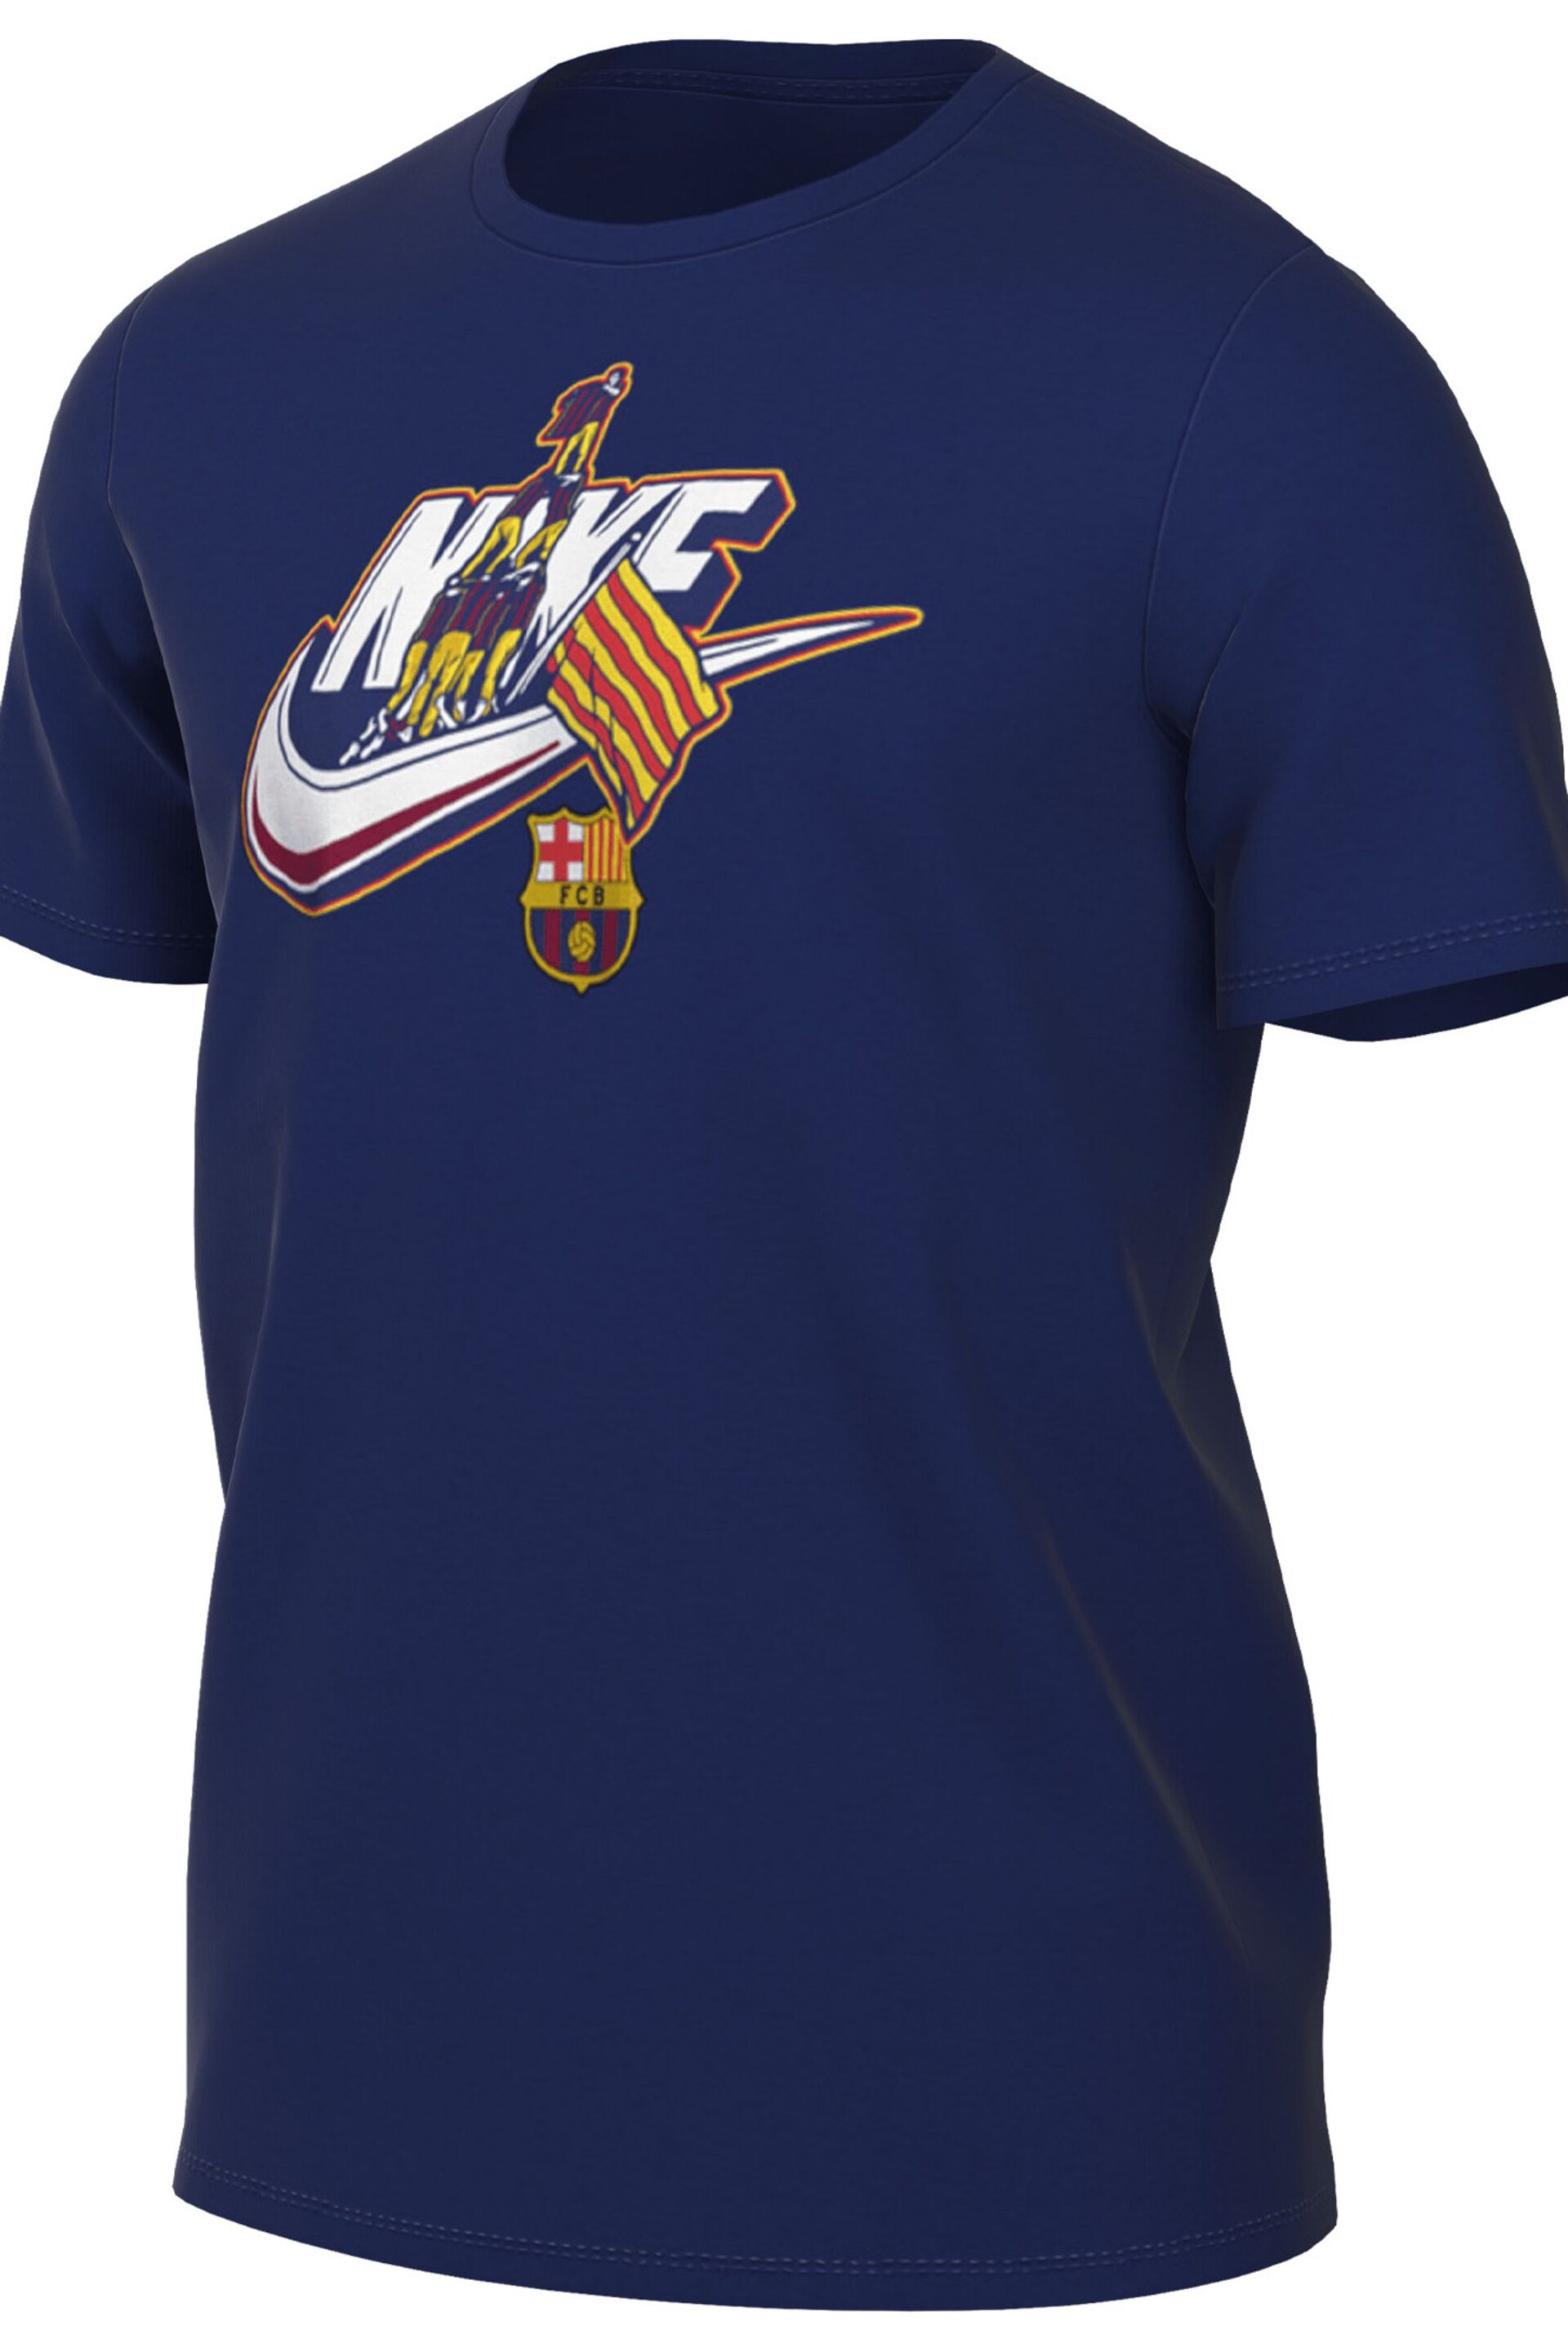 Nike Blue Barcelona Futura T-Shirt - Image 2 of 3